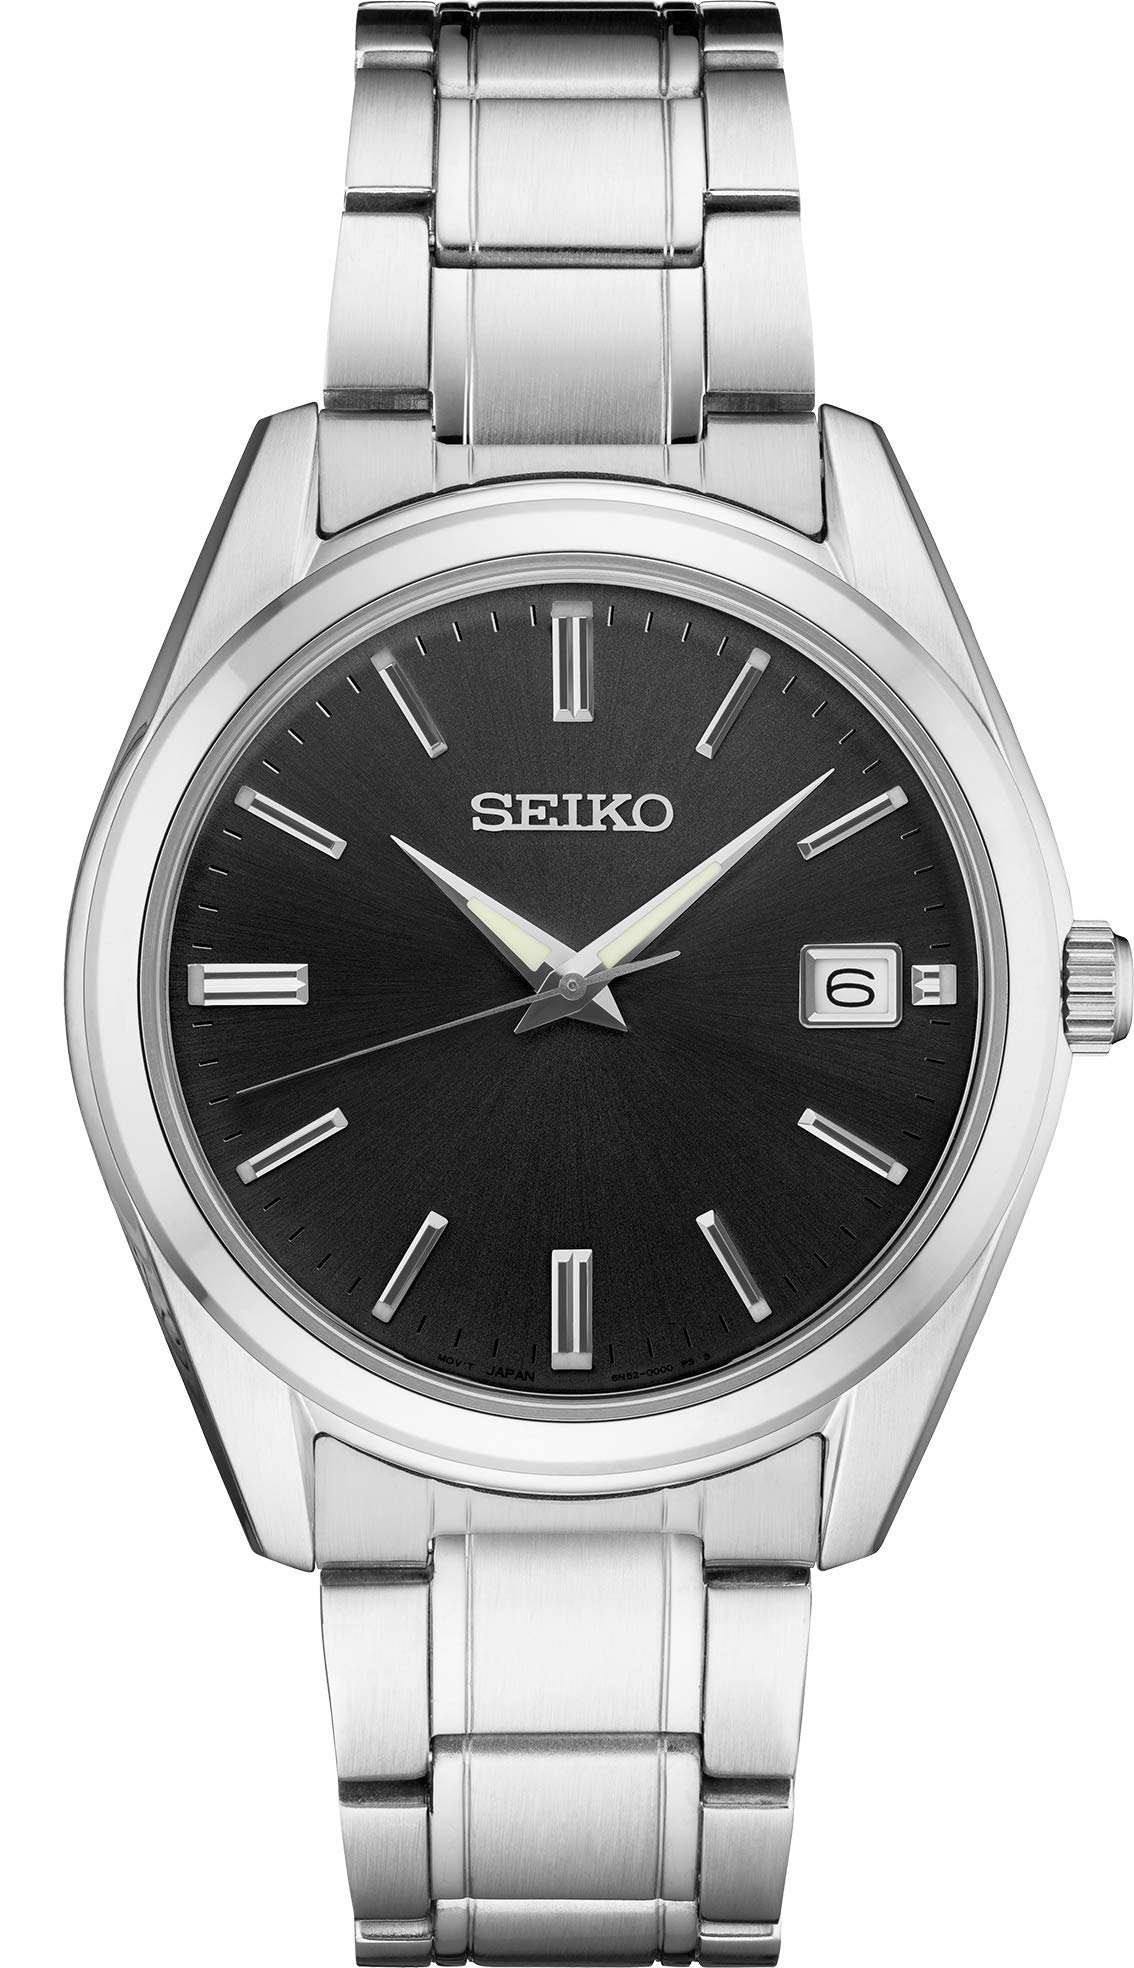 SEIKO SUR311 Watch for Men - Essentials Collection - Black Dial, Date Calendar, LumiBrite Hands, Stainless Steel Case & Bracelet, and 100m Water Resistant